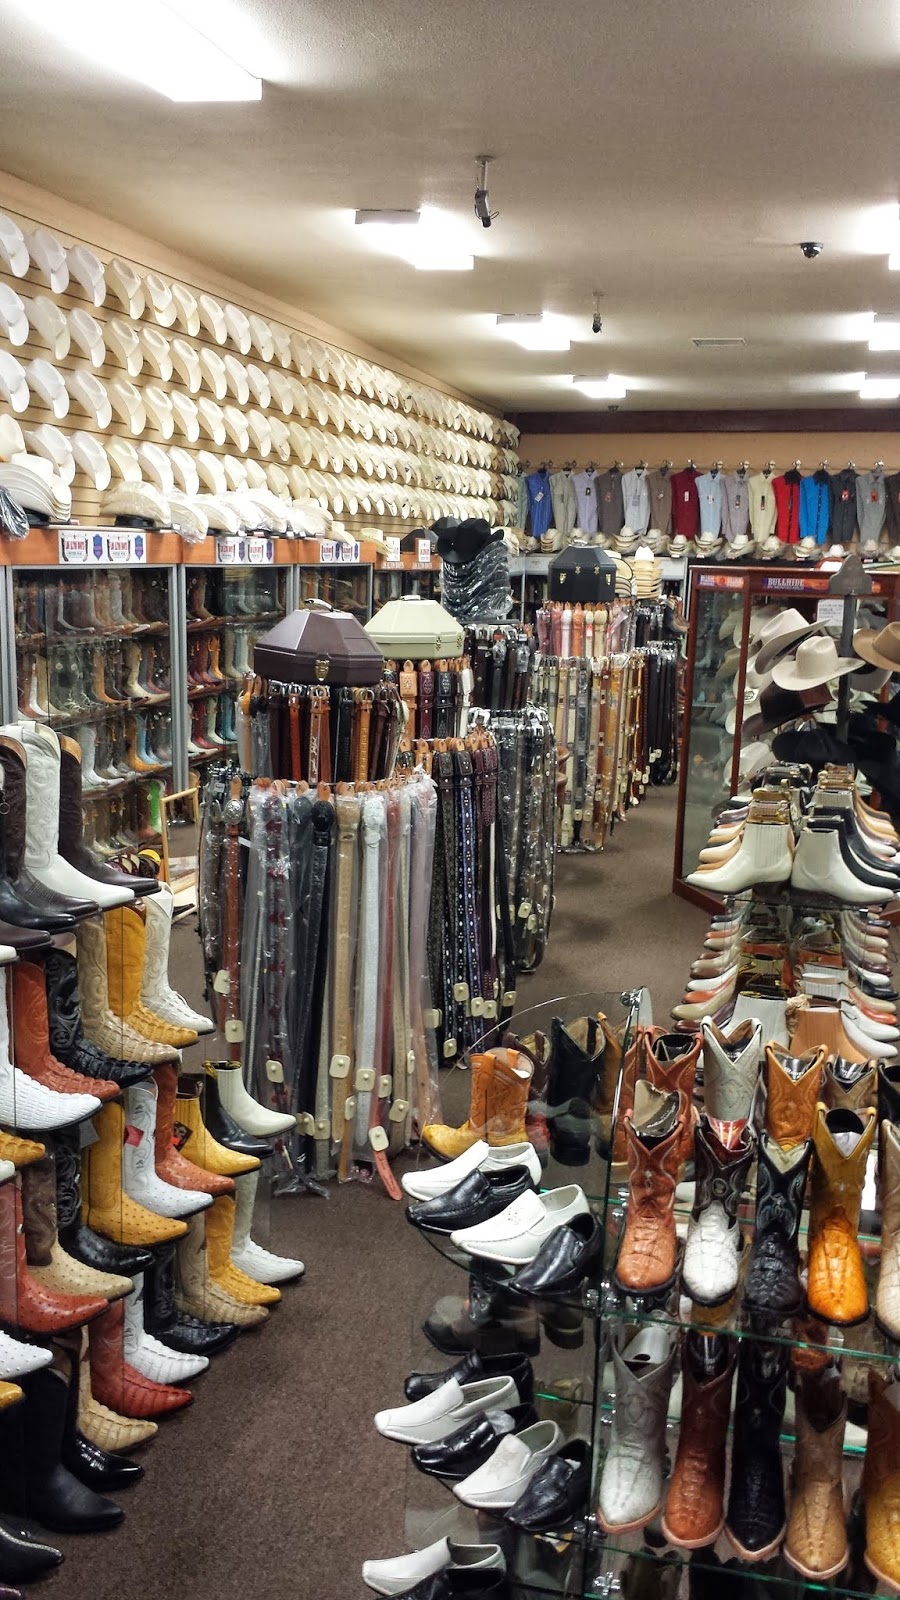 El Vaquero - The Cowboy Store - shoe store  | Photo 3 of 10 | Address: 506 E First St, Santa Ana, CA 92701, USA | Phone: (714) 547-9609